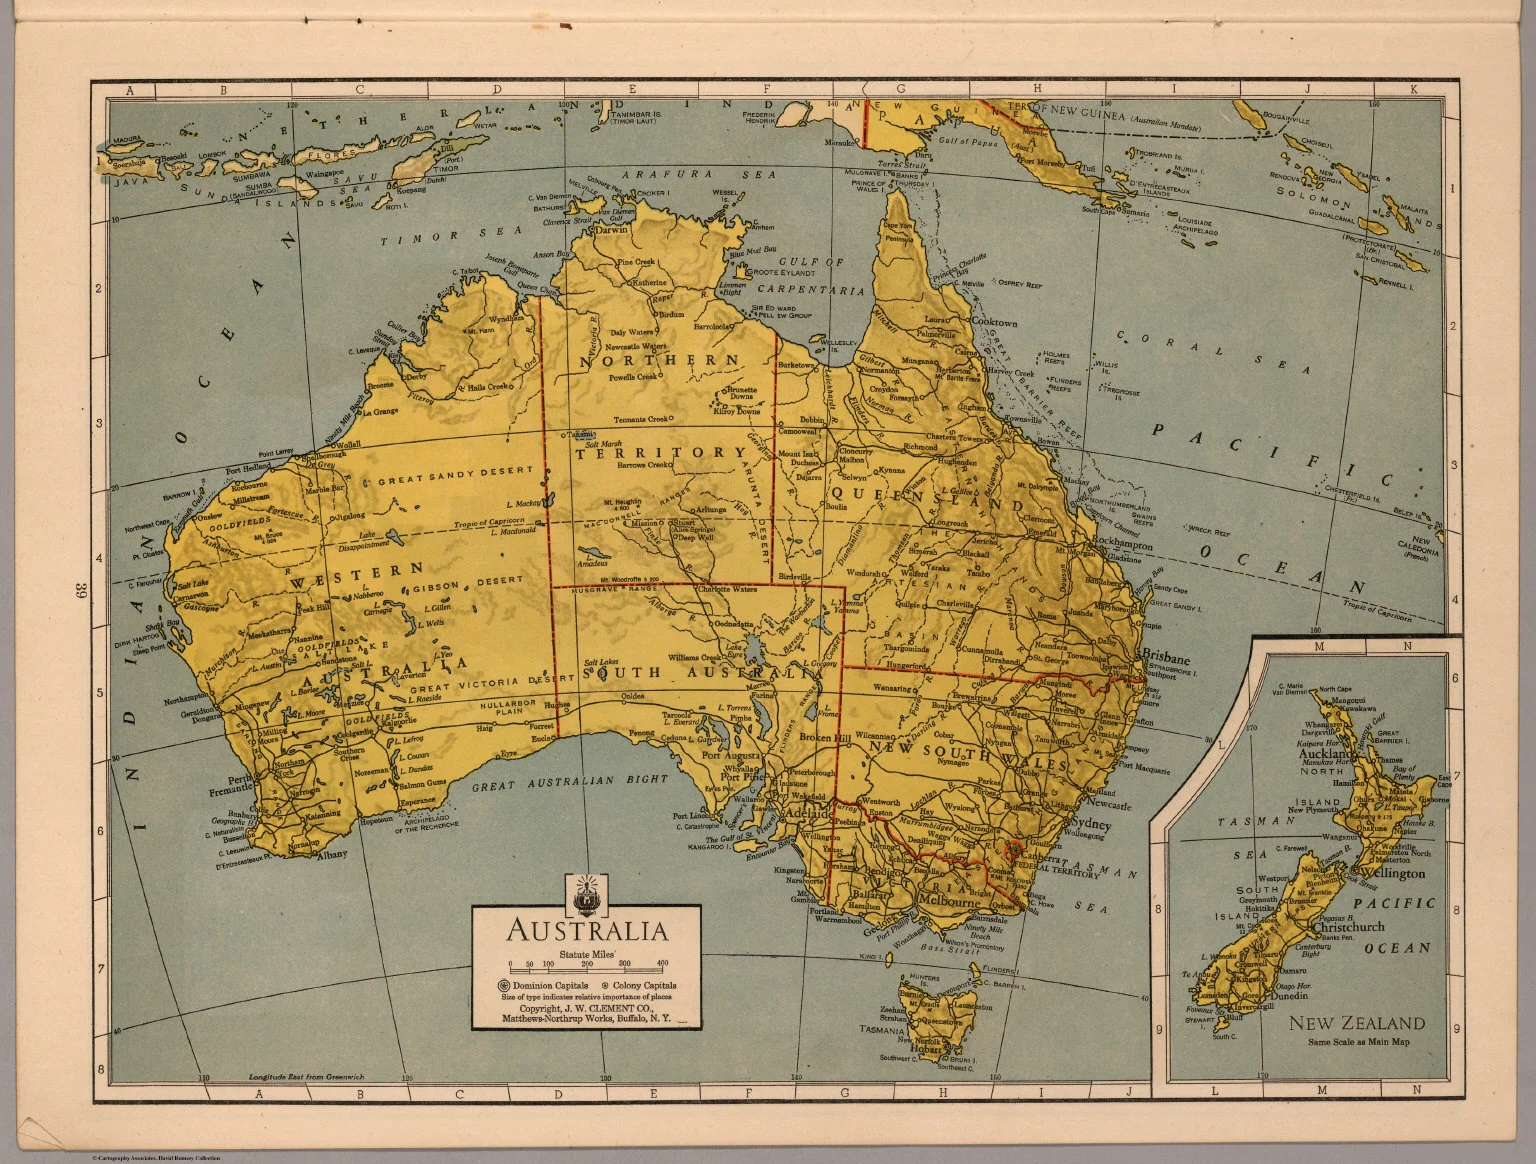 Australia. Copyright, J.W. Clement Co., Matthews-Northrup Works, Buffalo, N.Y. (inset map) New Zealand.